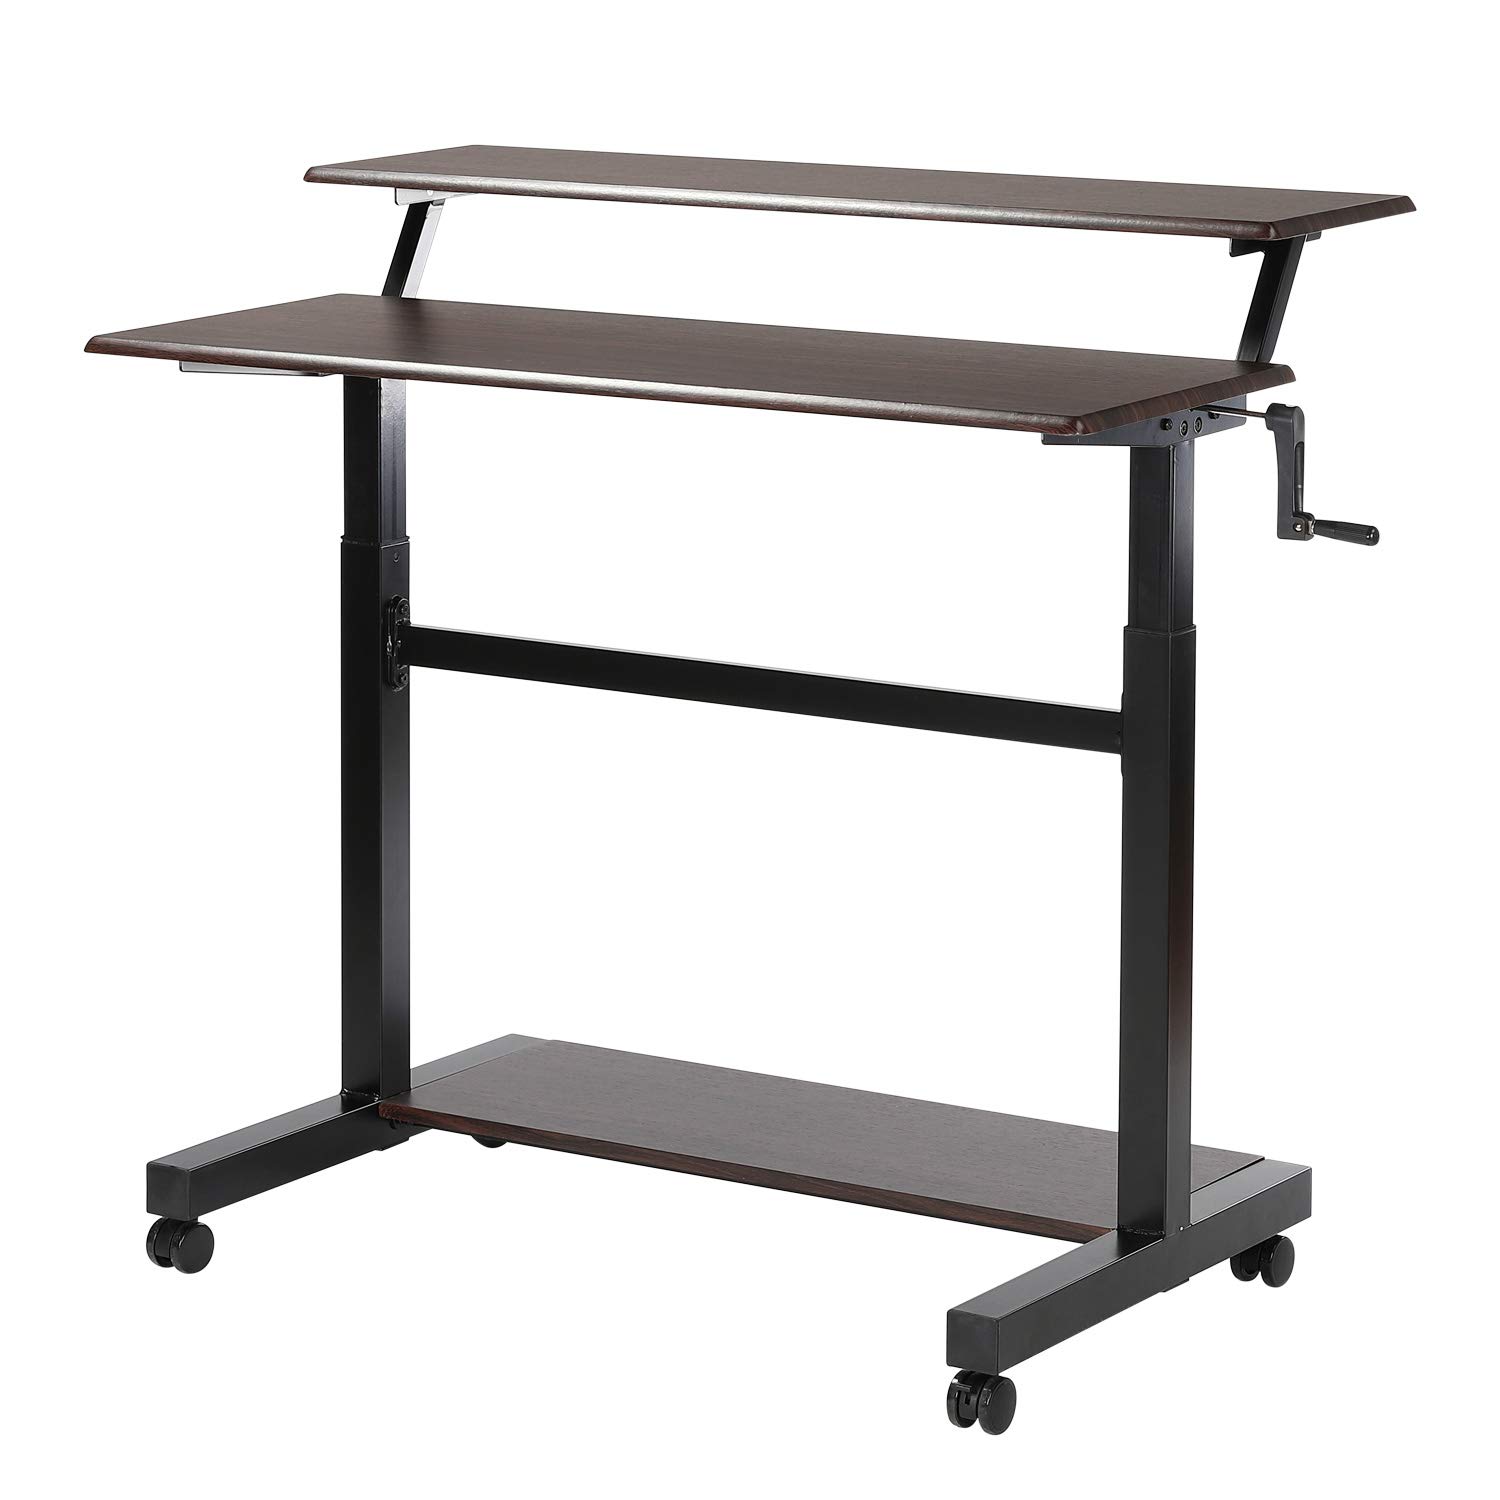 UNICOO – Crank Adjustable Height Standing Desk, 2 Tier Adjustable Sit to Stand up Desk, Mobile Standing Desk, Rolling Table – (White Frame/Light Oa...